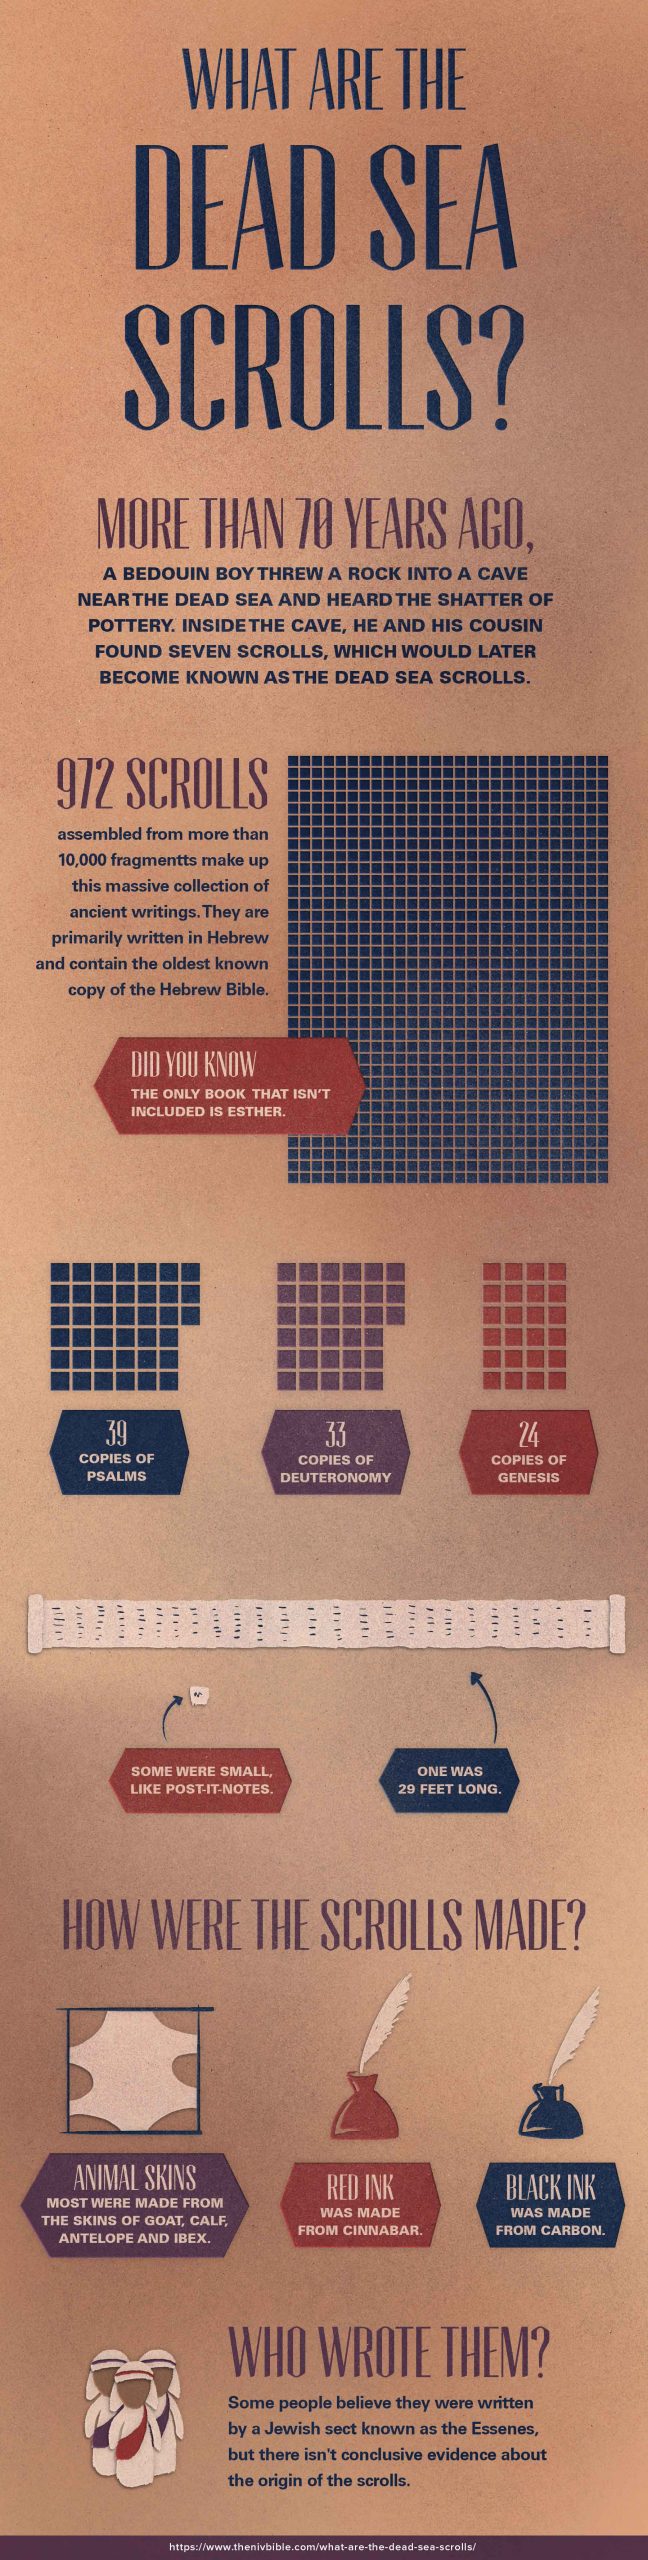 Dead Sea scrolls infographic